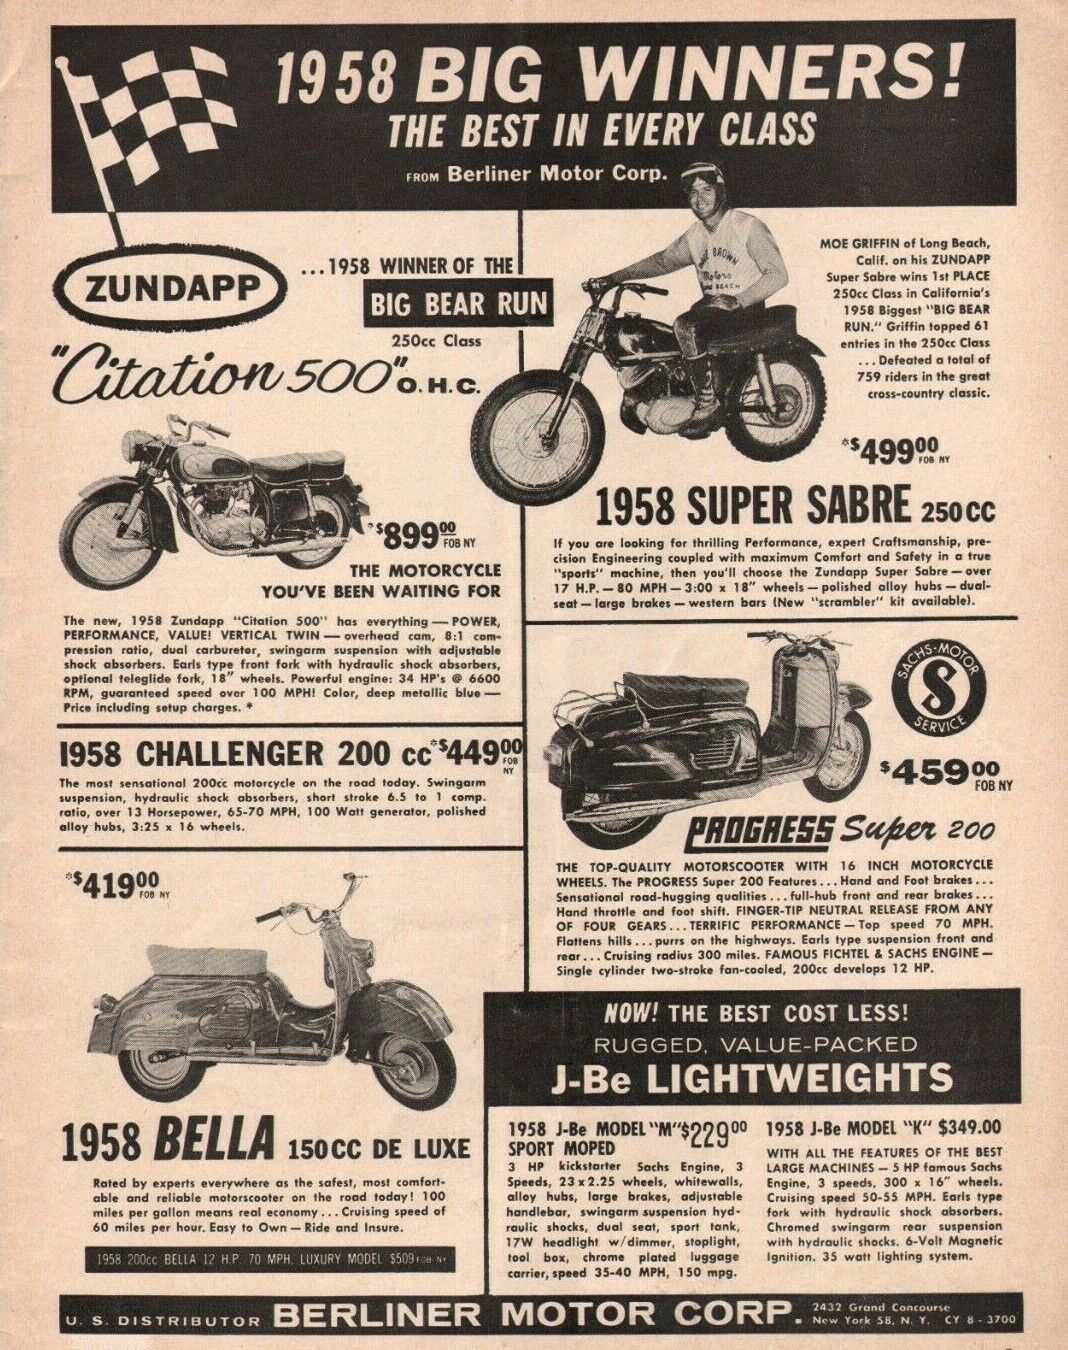 1958 Zundapp Citation & Super Sabre - Vintage Berliner Motorcycle Ad 